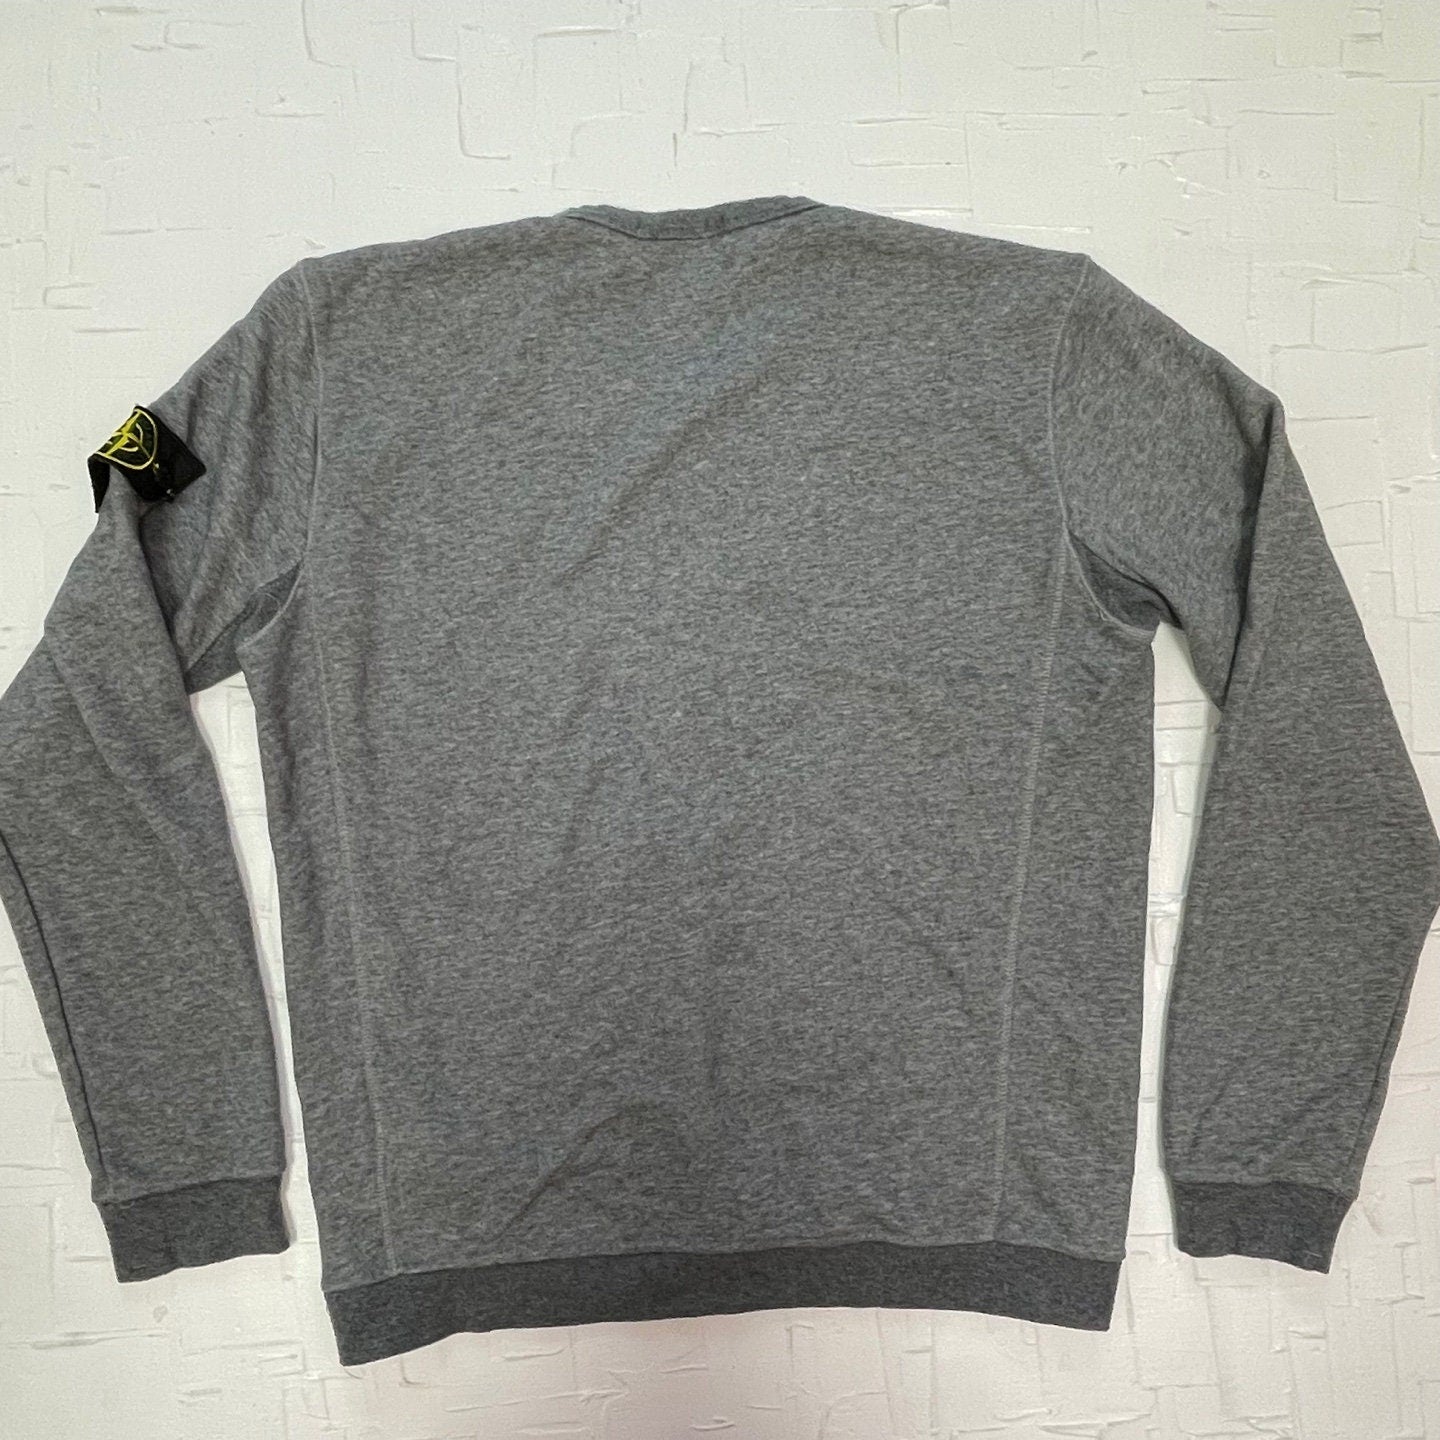 Grey Stone Island Crewneck Sweatshirt | Stone Island | Second Hand Stone Island | Pullover Sweatshirt | Size M | SKU: M-1392